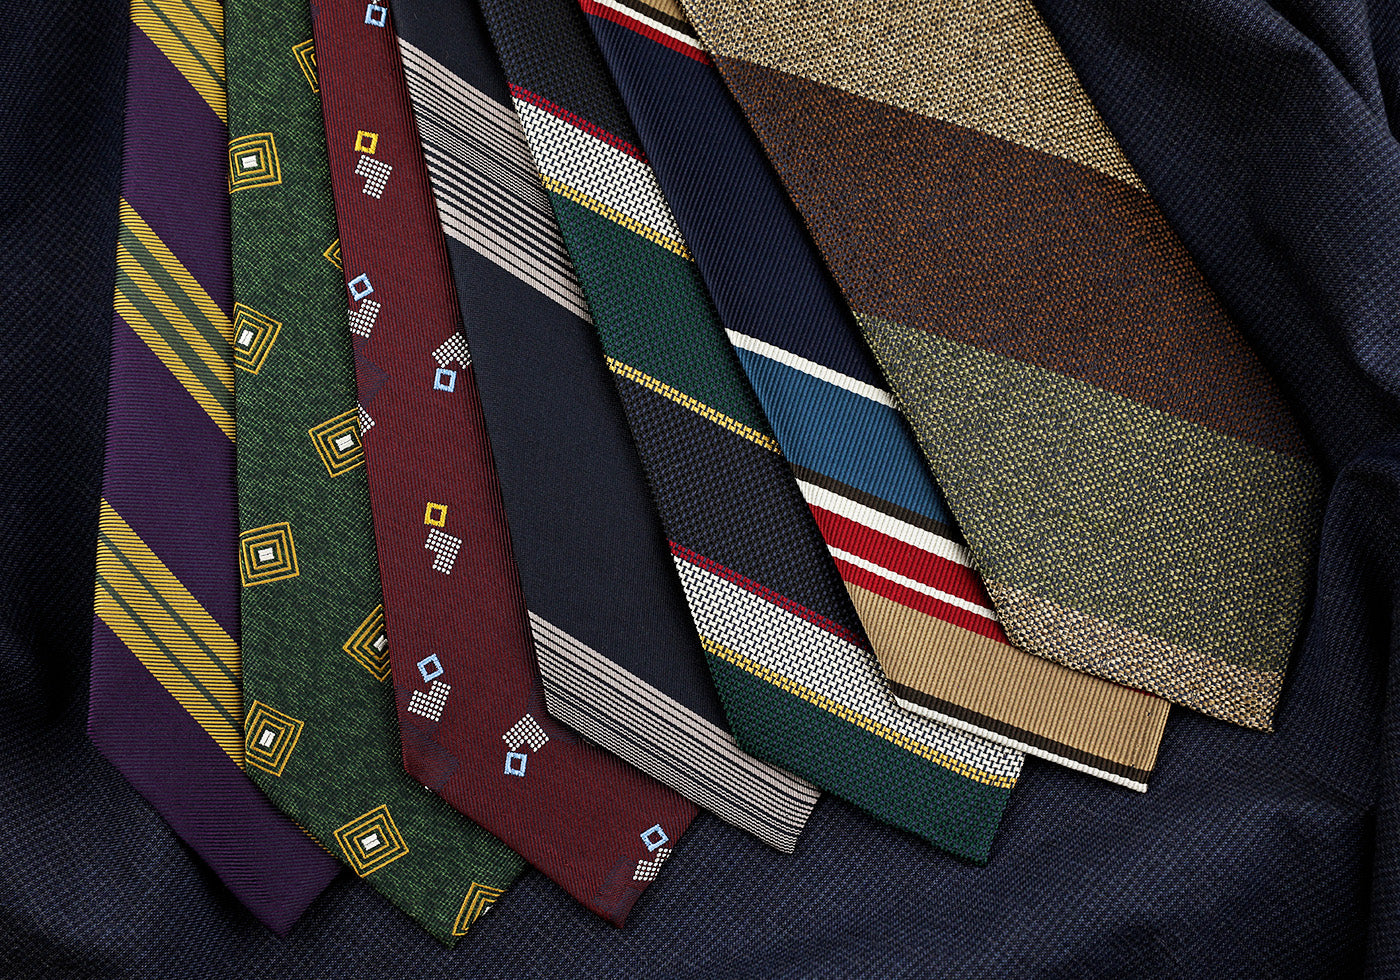 Handmade ties by Shibumi - Made in Italy